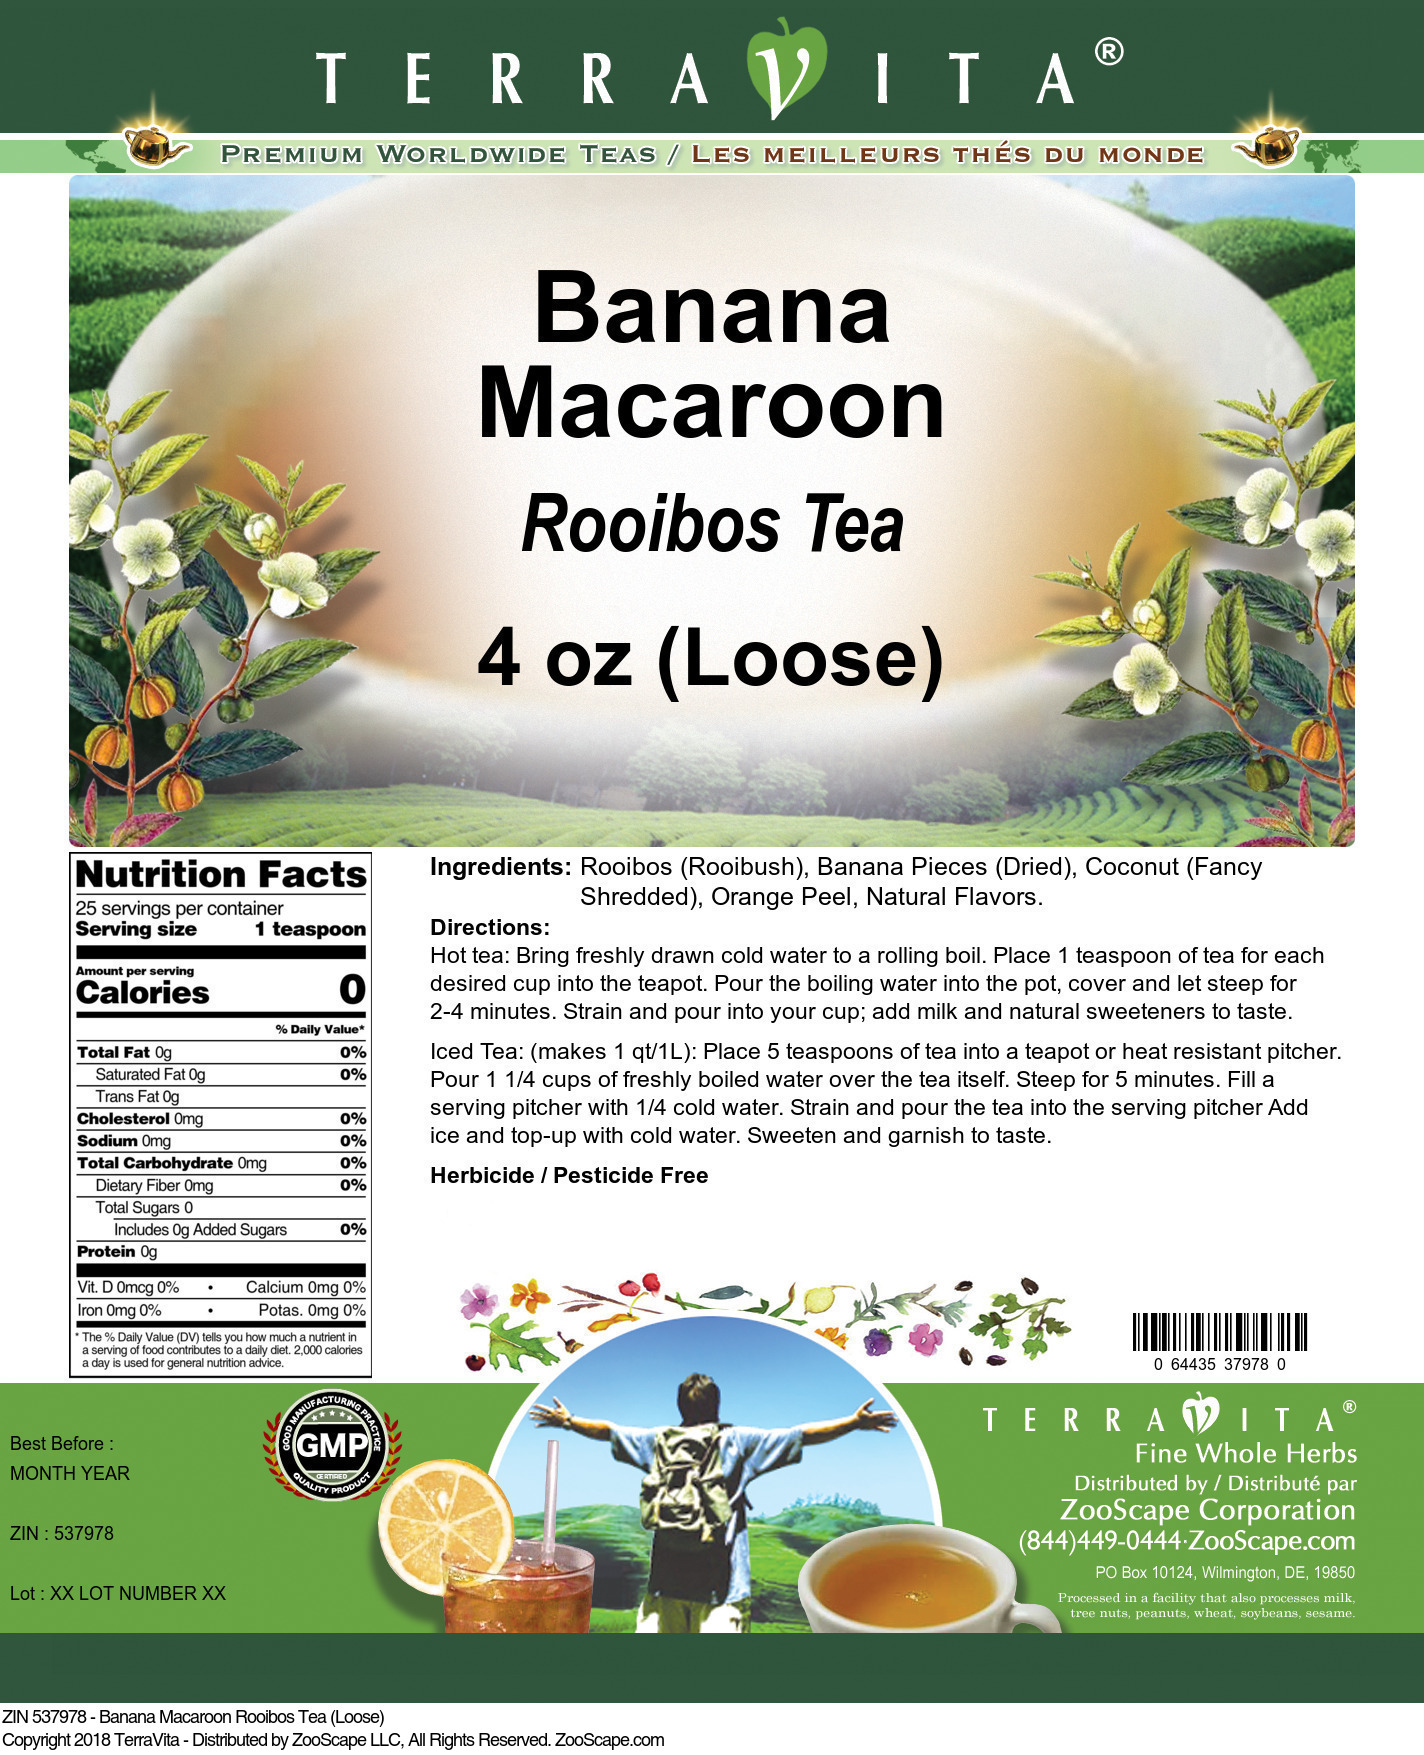 Banana Macaroon Rooibos Tea (Loose) - Label